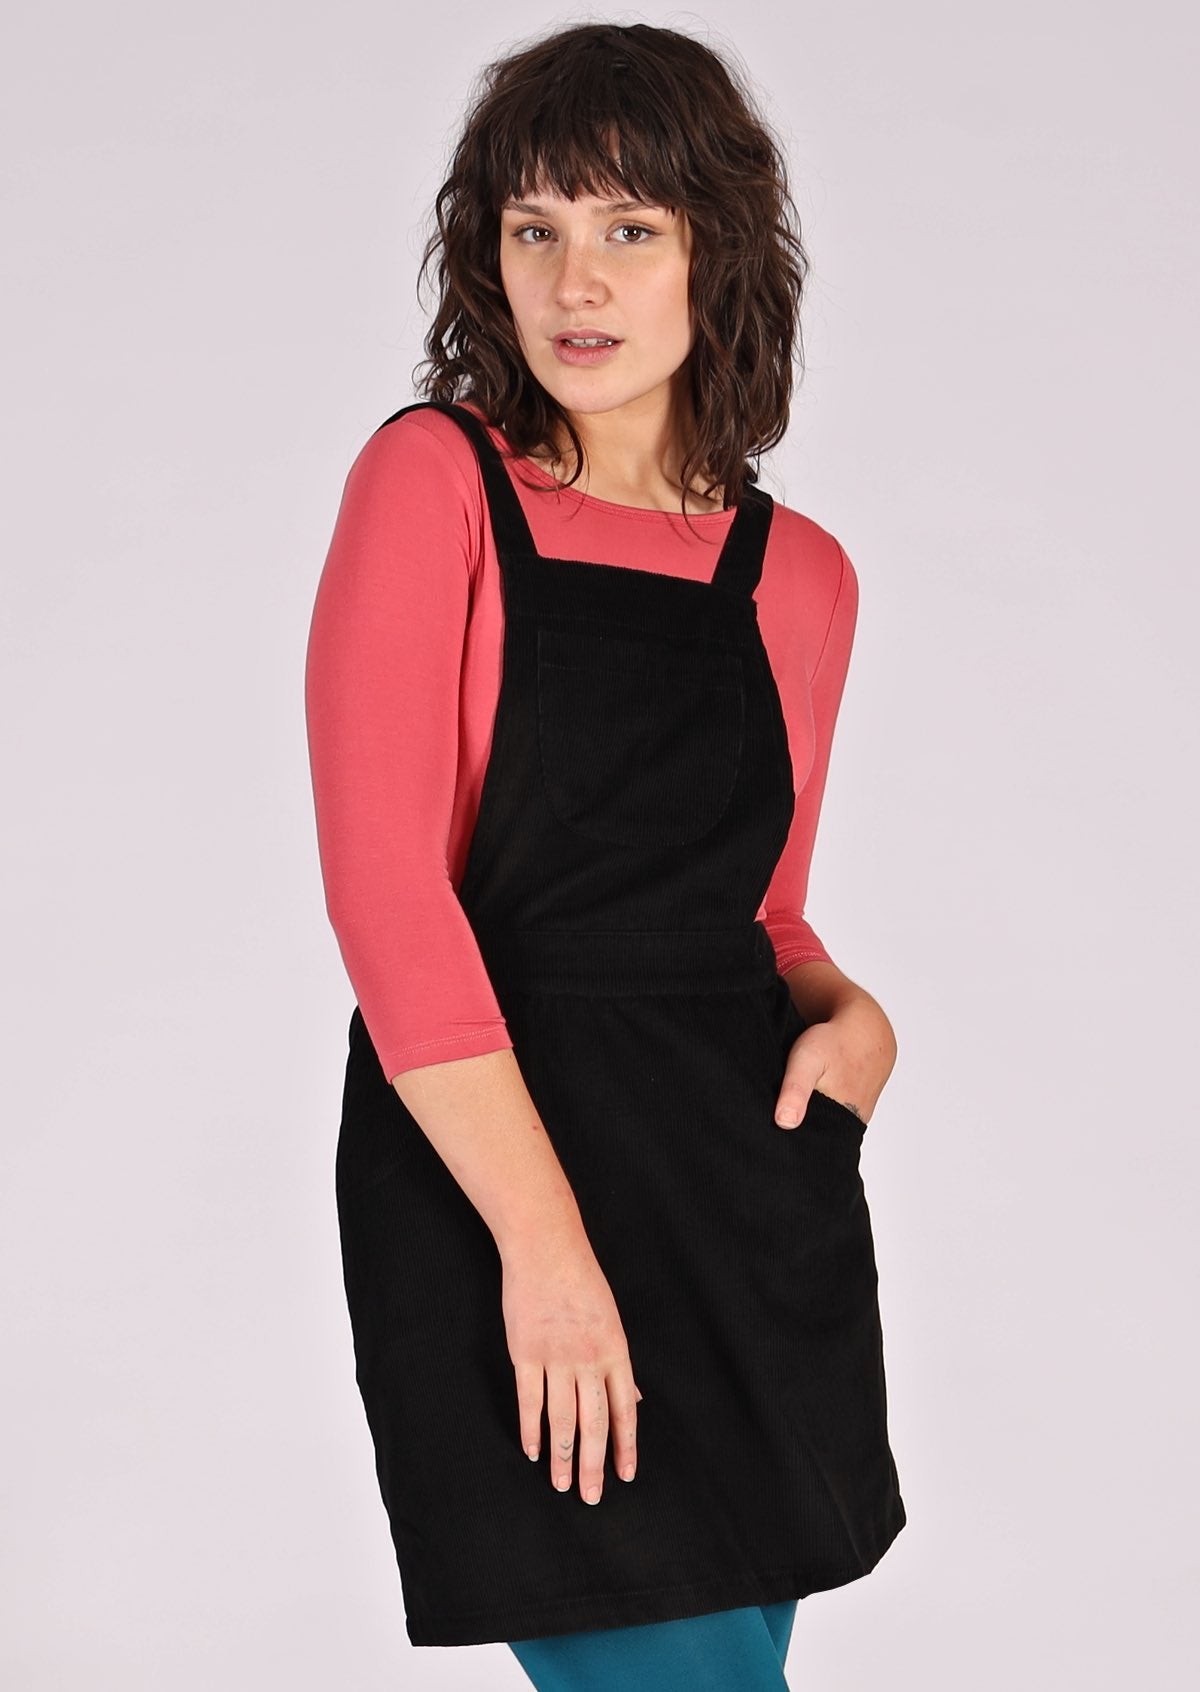 woman wearing black corduroy pinafore over pink top